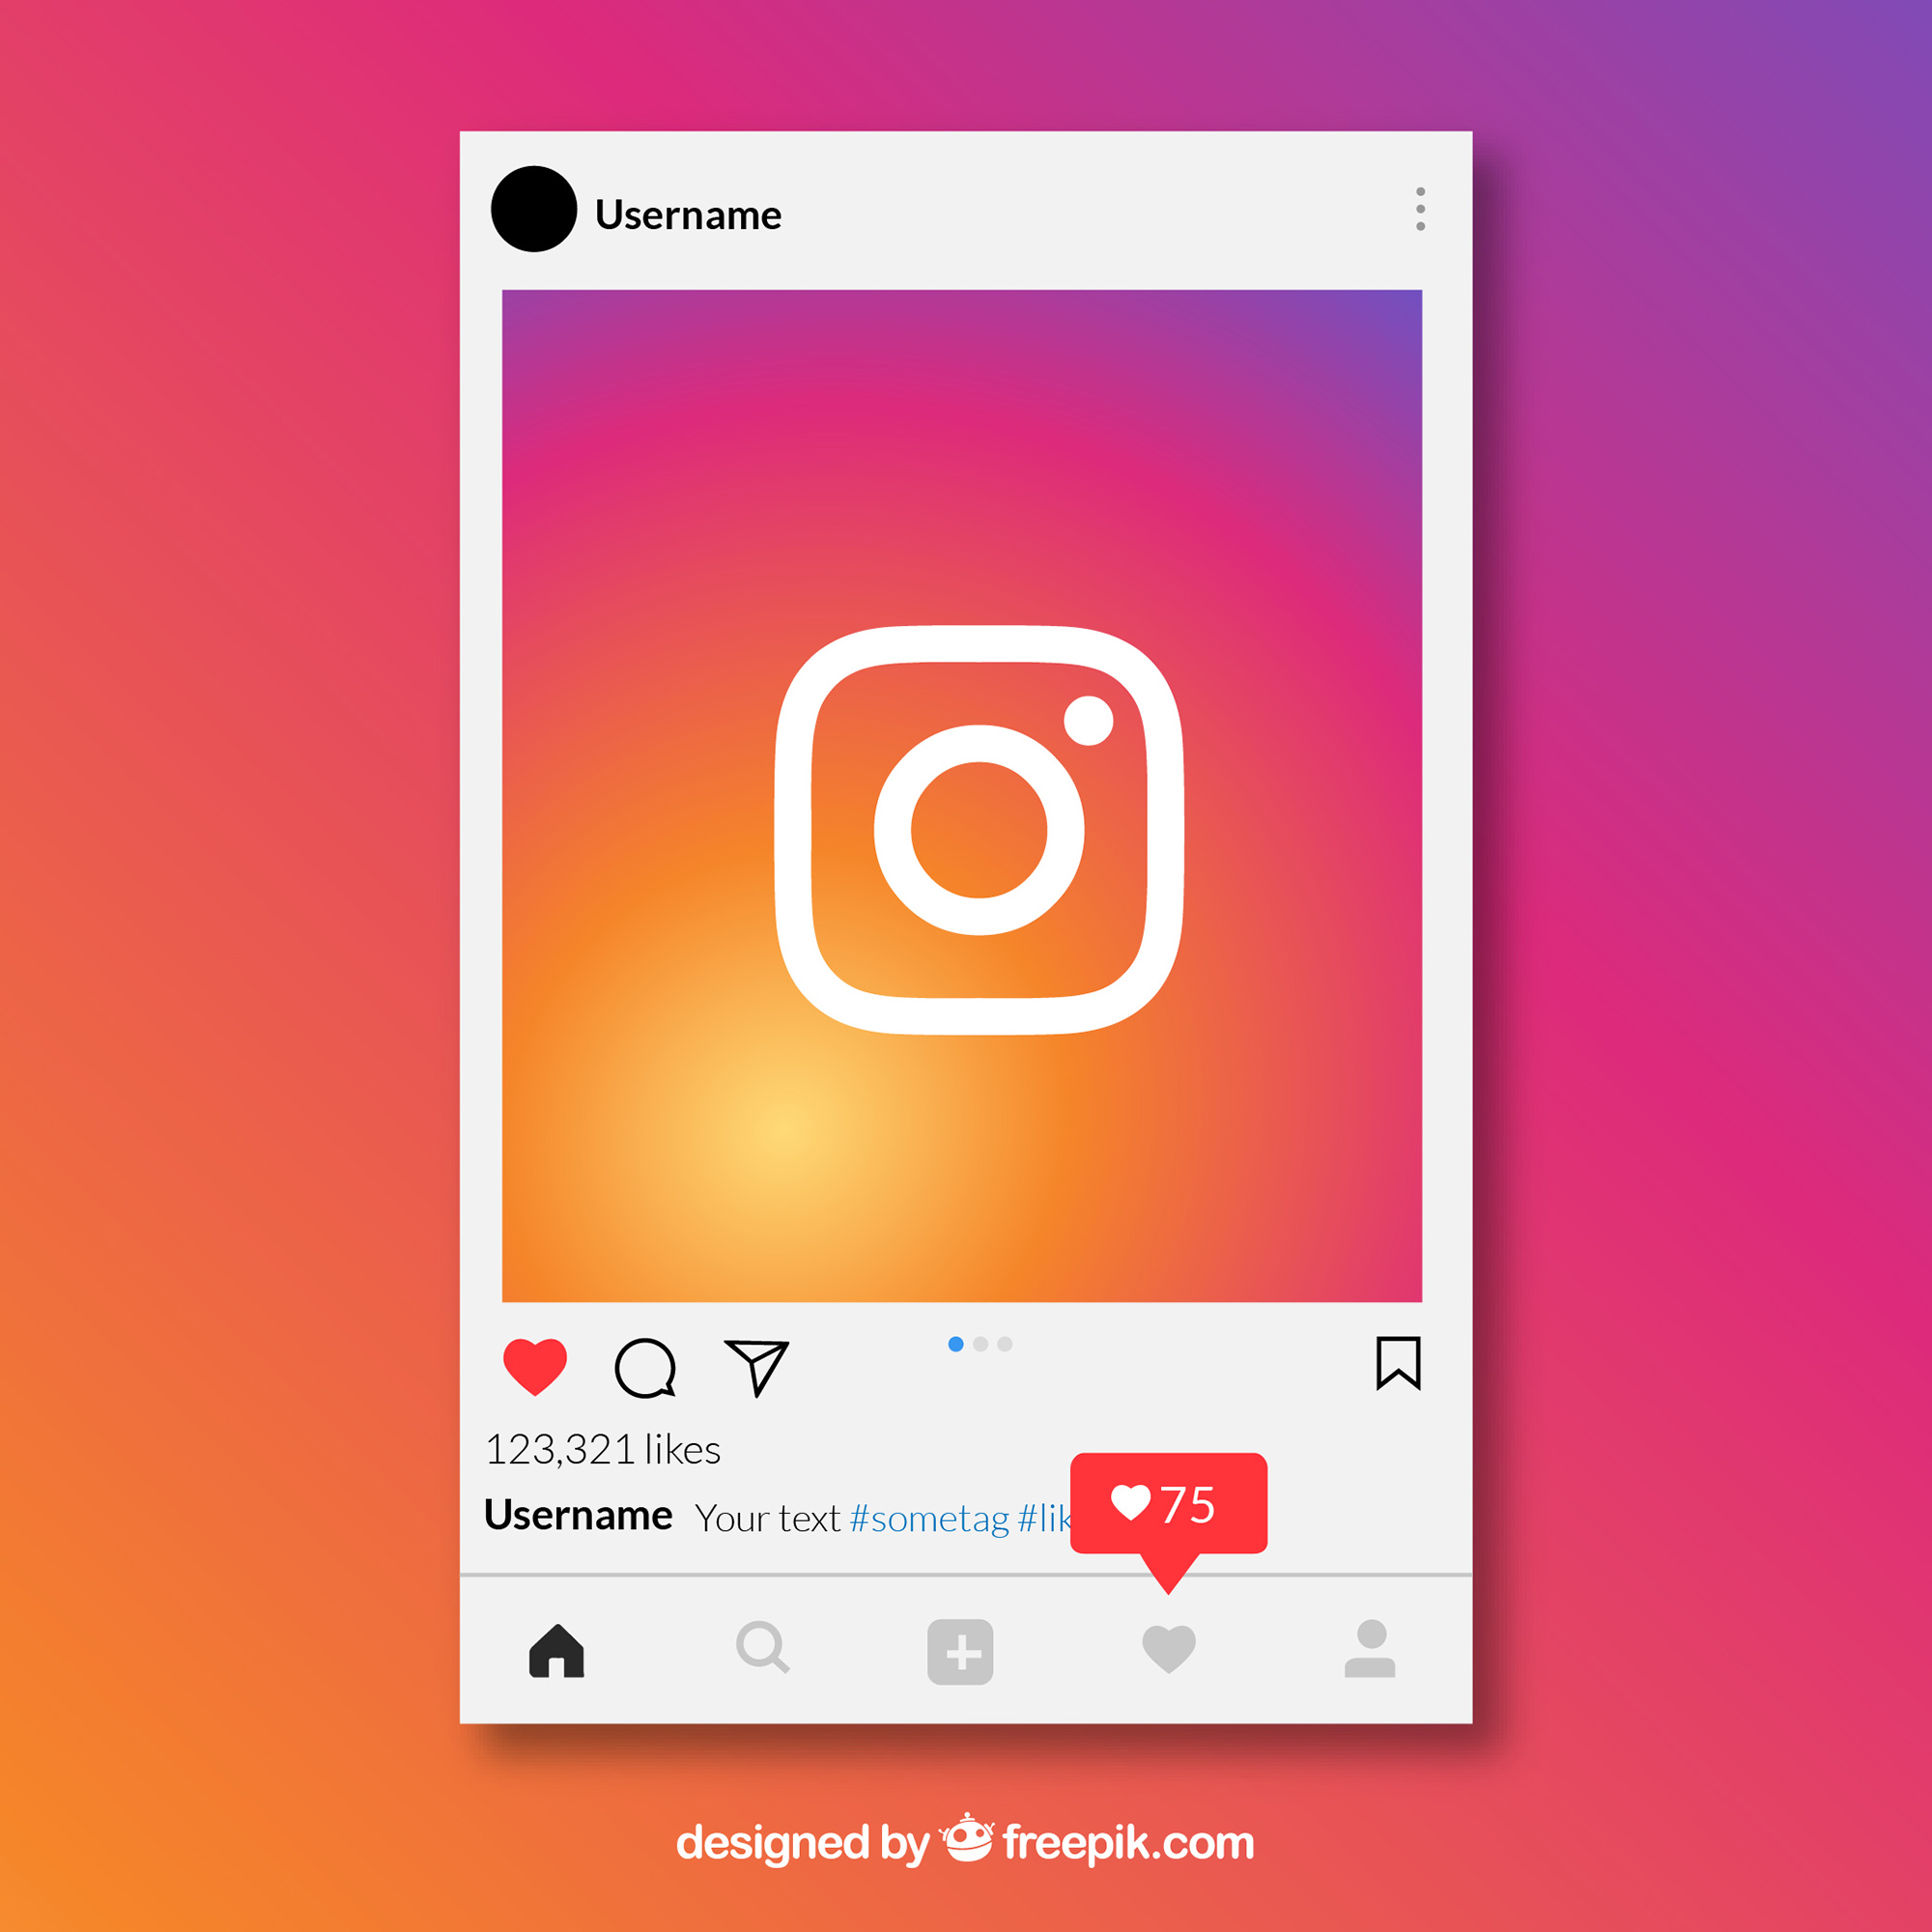 Instagram hashtag generator homepage image